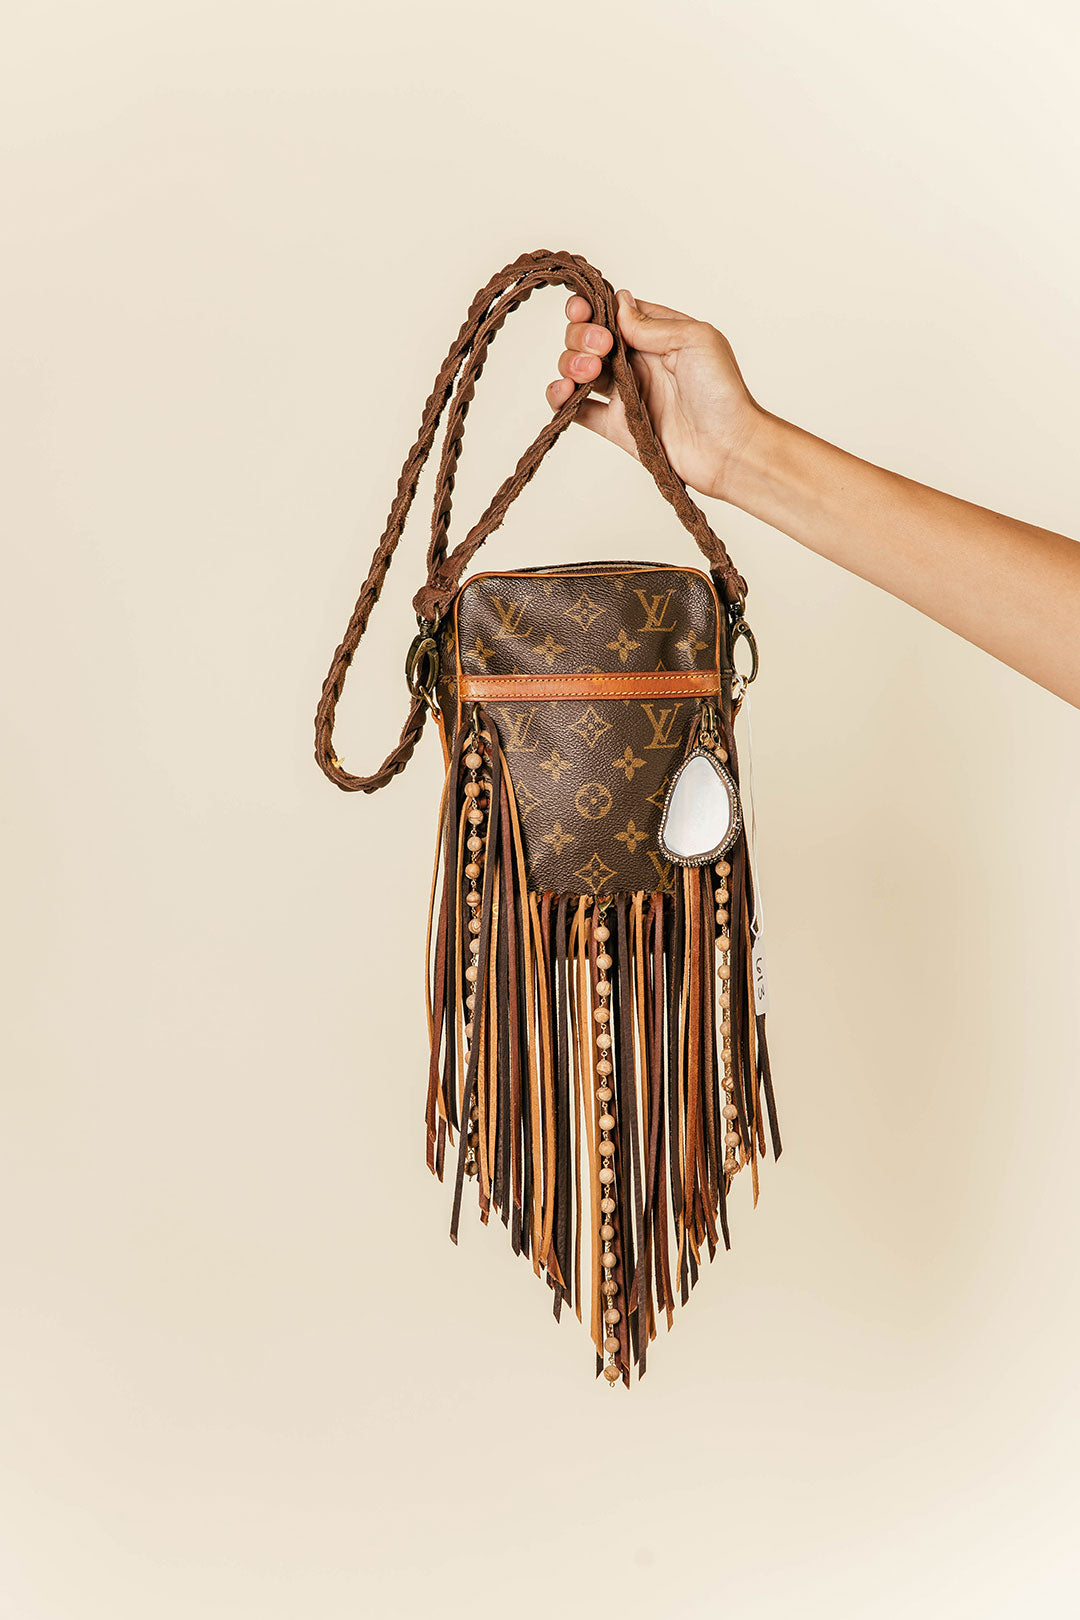 Winter Flash Sale Bag #0333 – Vintage Boho Bags